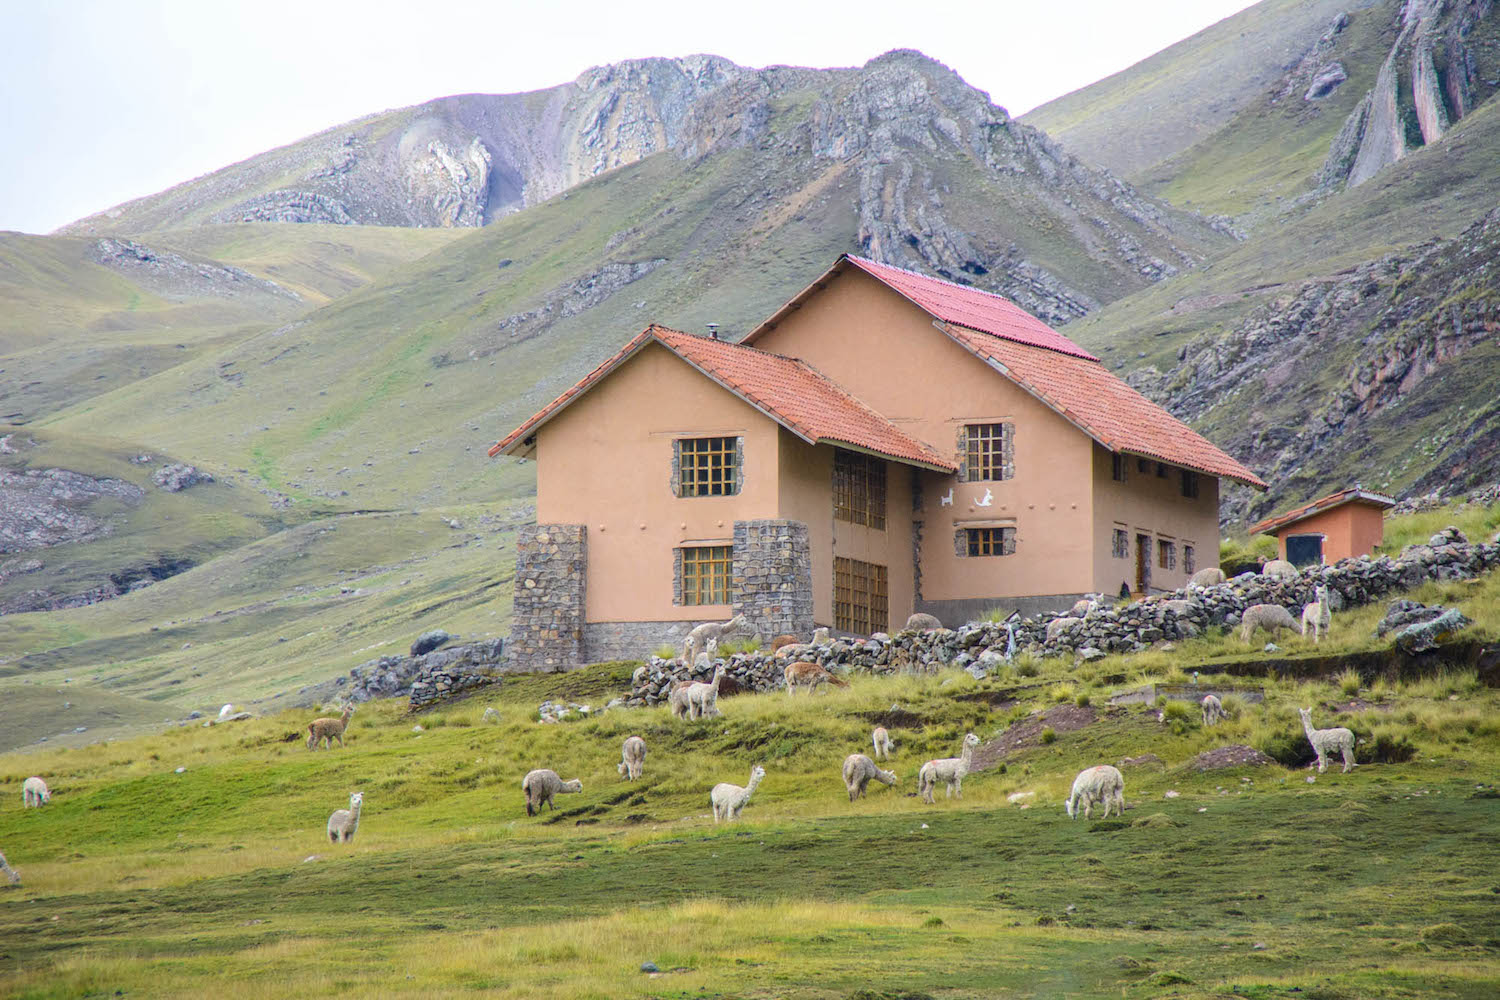 unusual hotel lodge in the ausangate mountains of peru